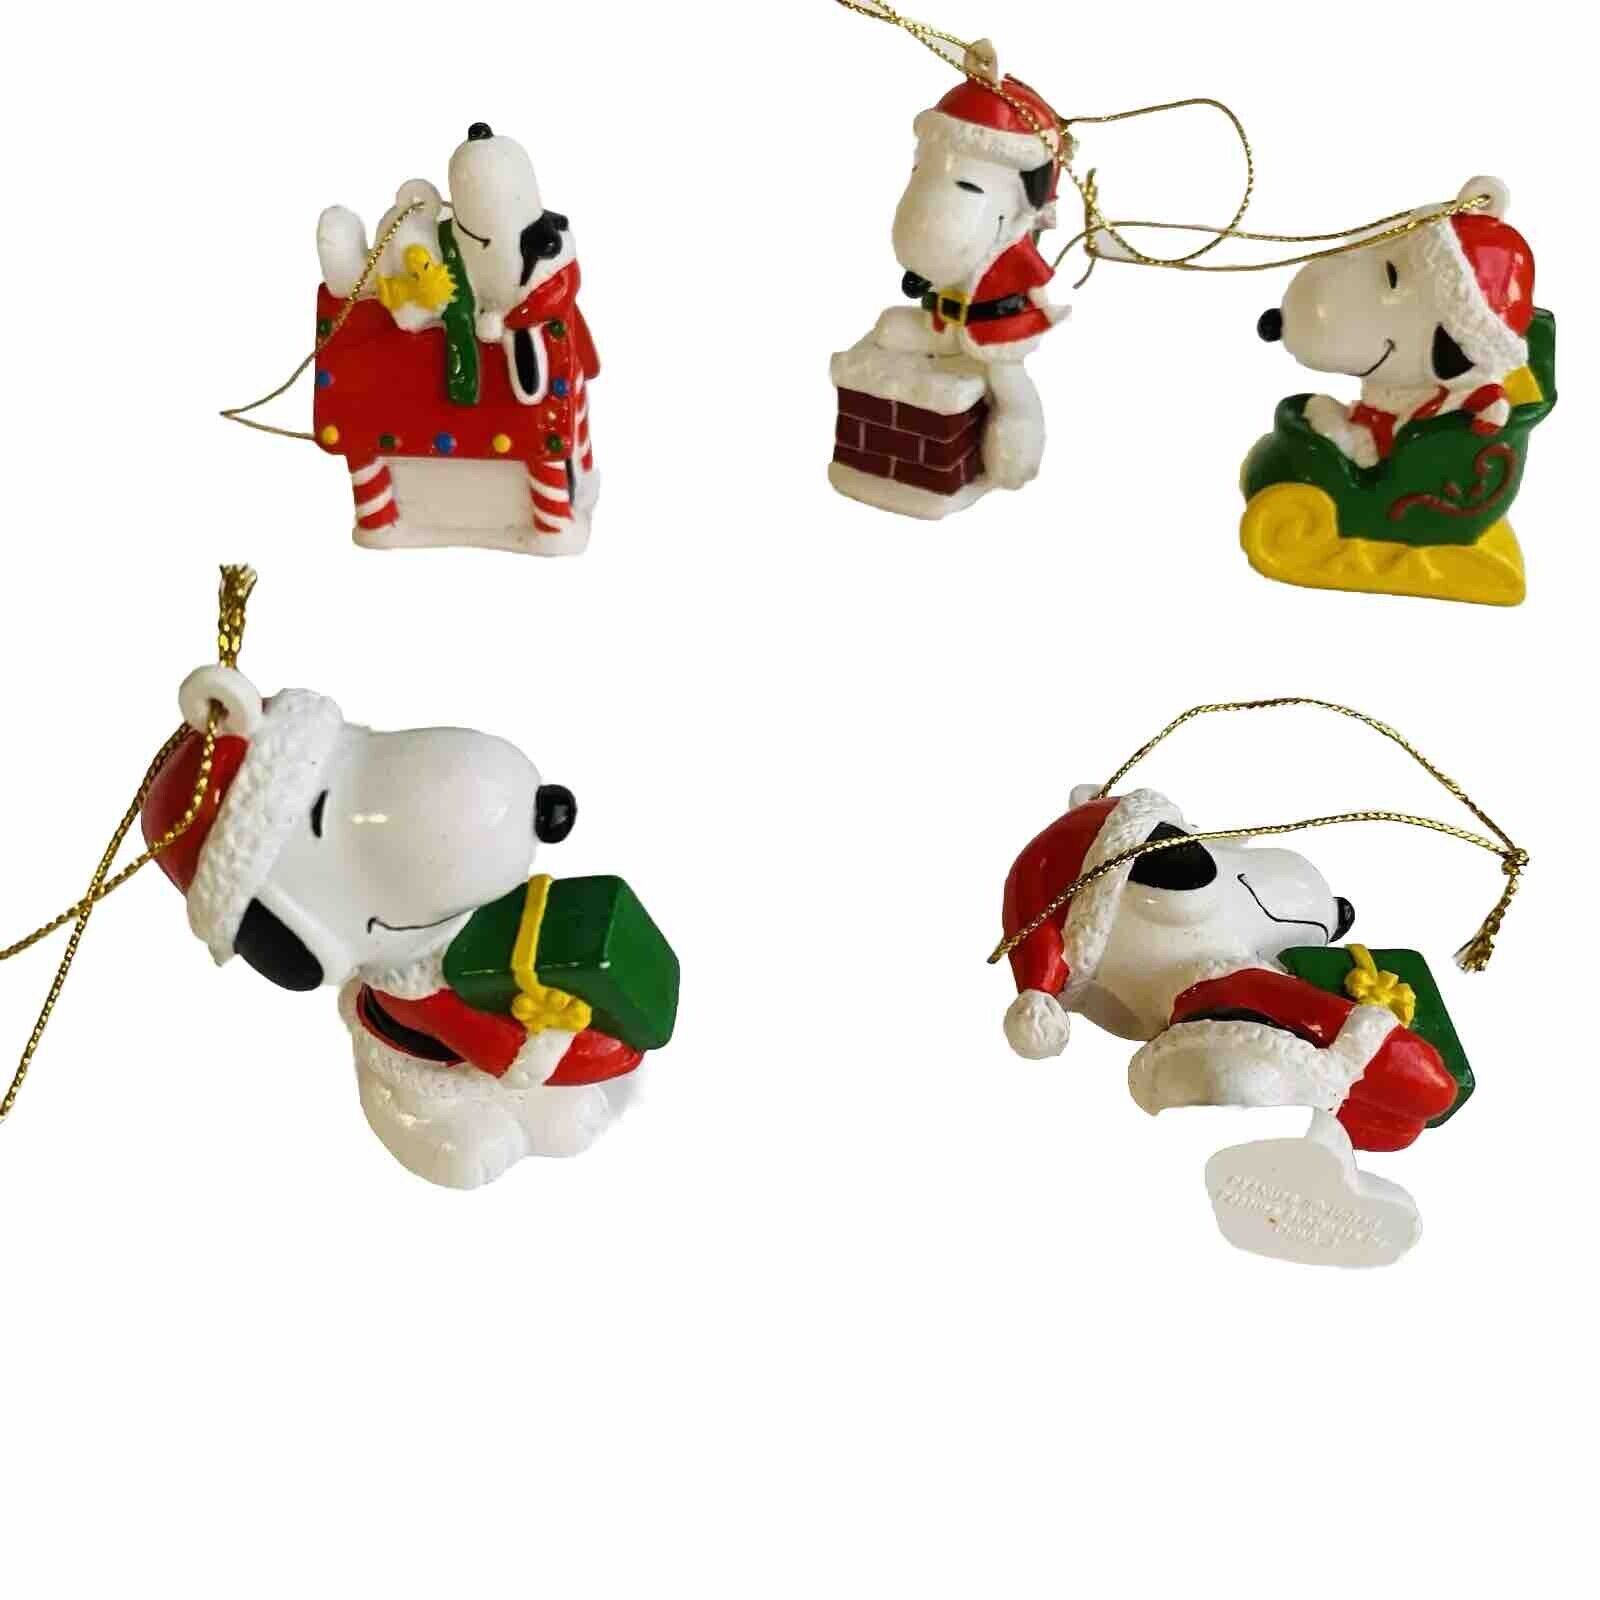 Lot of 5 Veg Peanuts Snoopy Woodstock Christmas Ornaments PVC Figurines